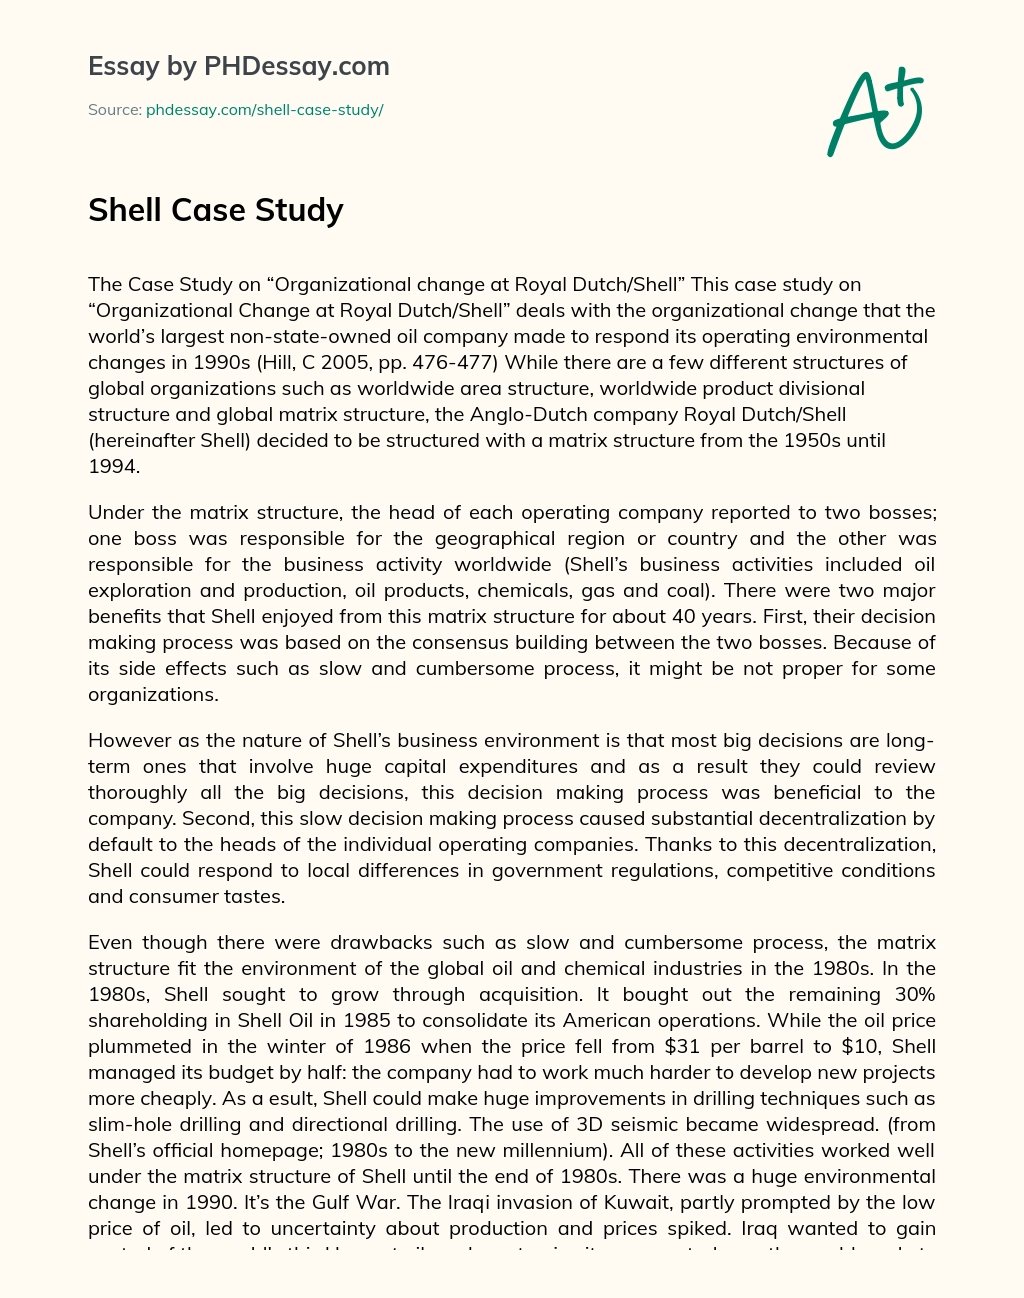 Shell Case Study essay